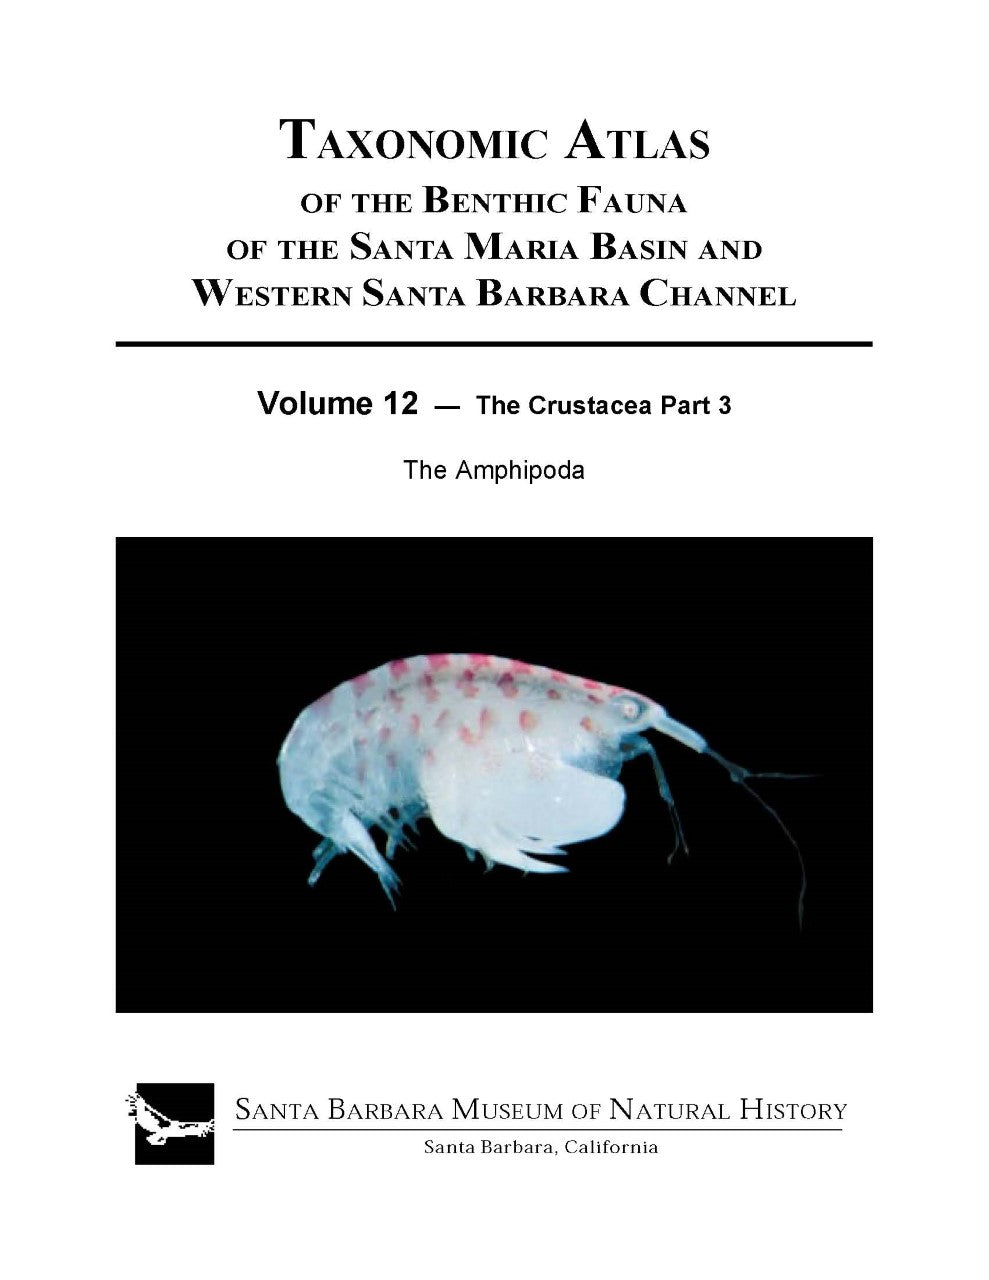 Taxonomic Atlas of the Benthic Fauna of the Santa Maria Basin and Western Santa Barbara Channel Vol. 12